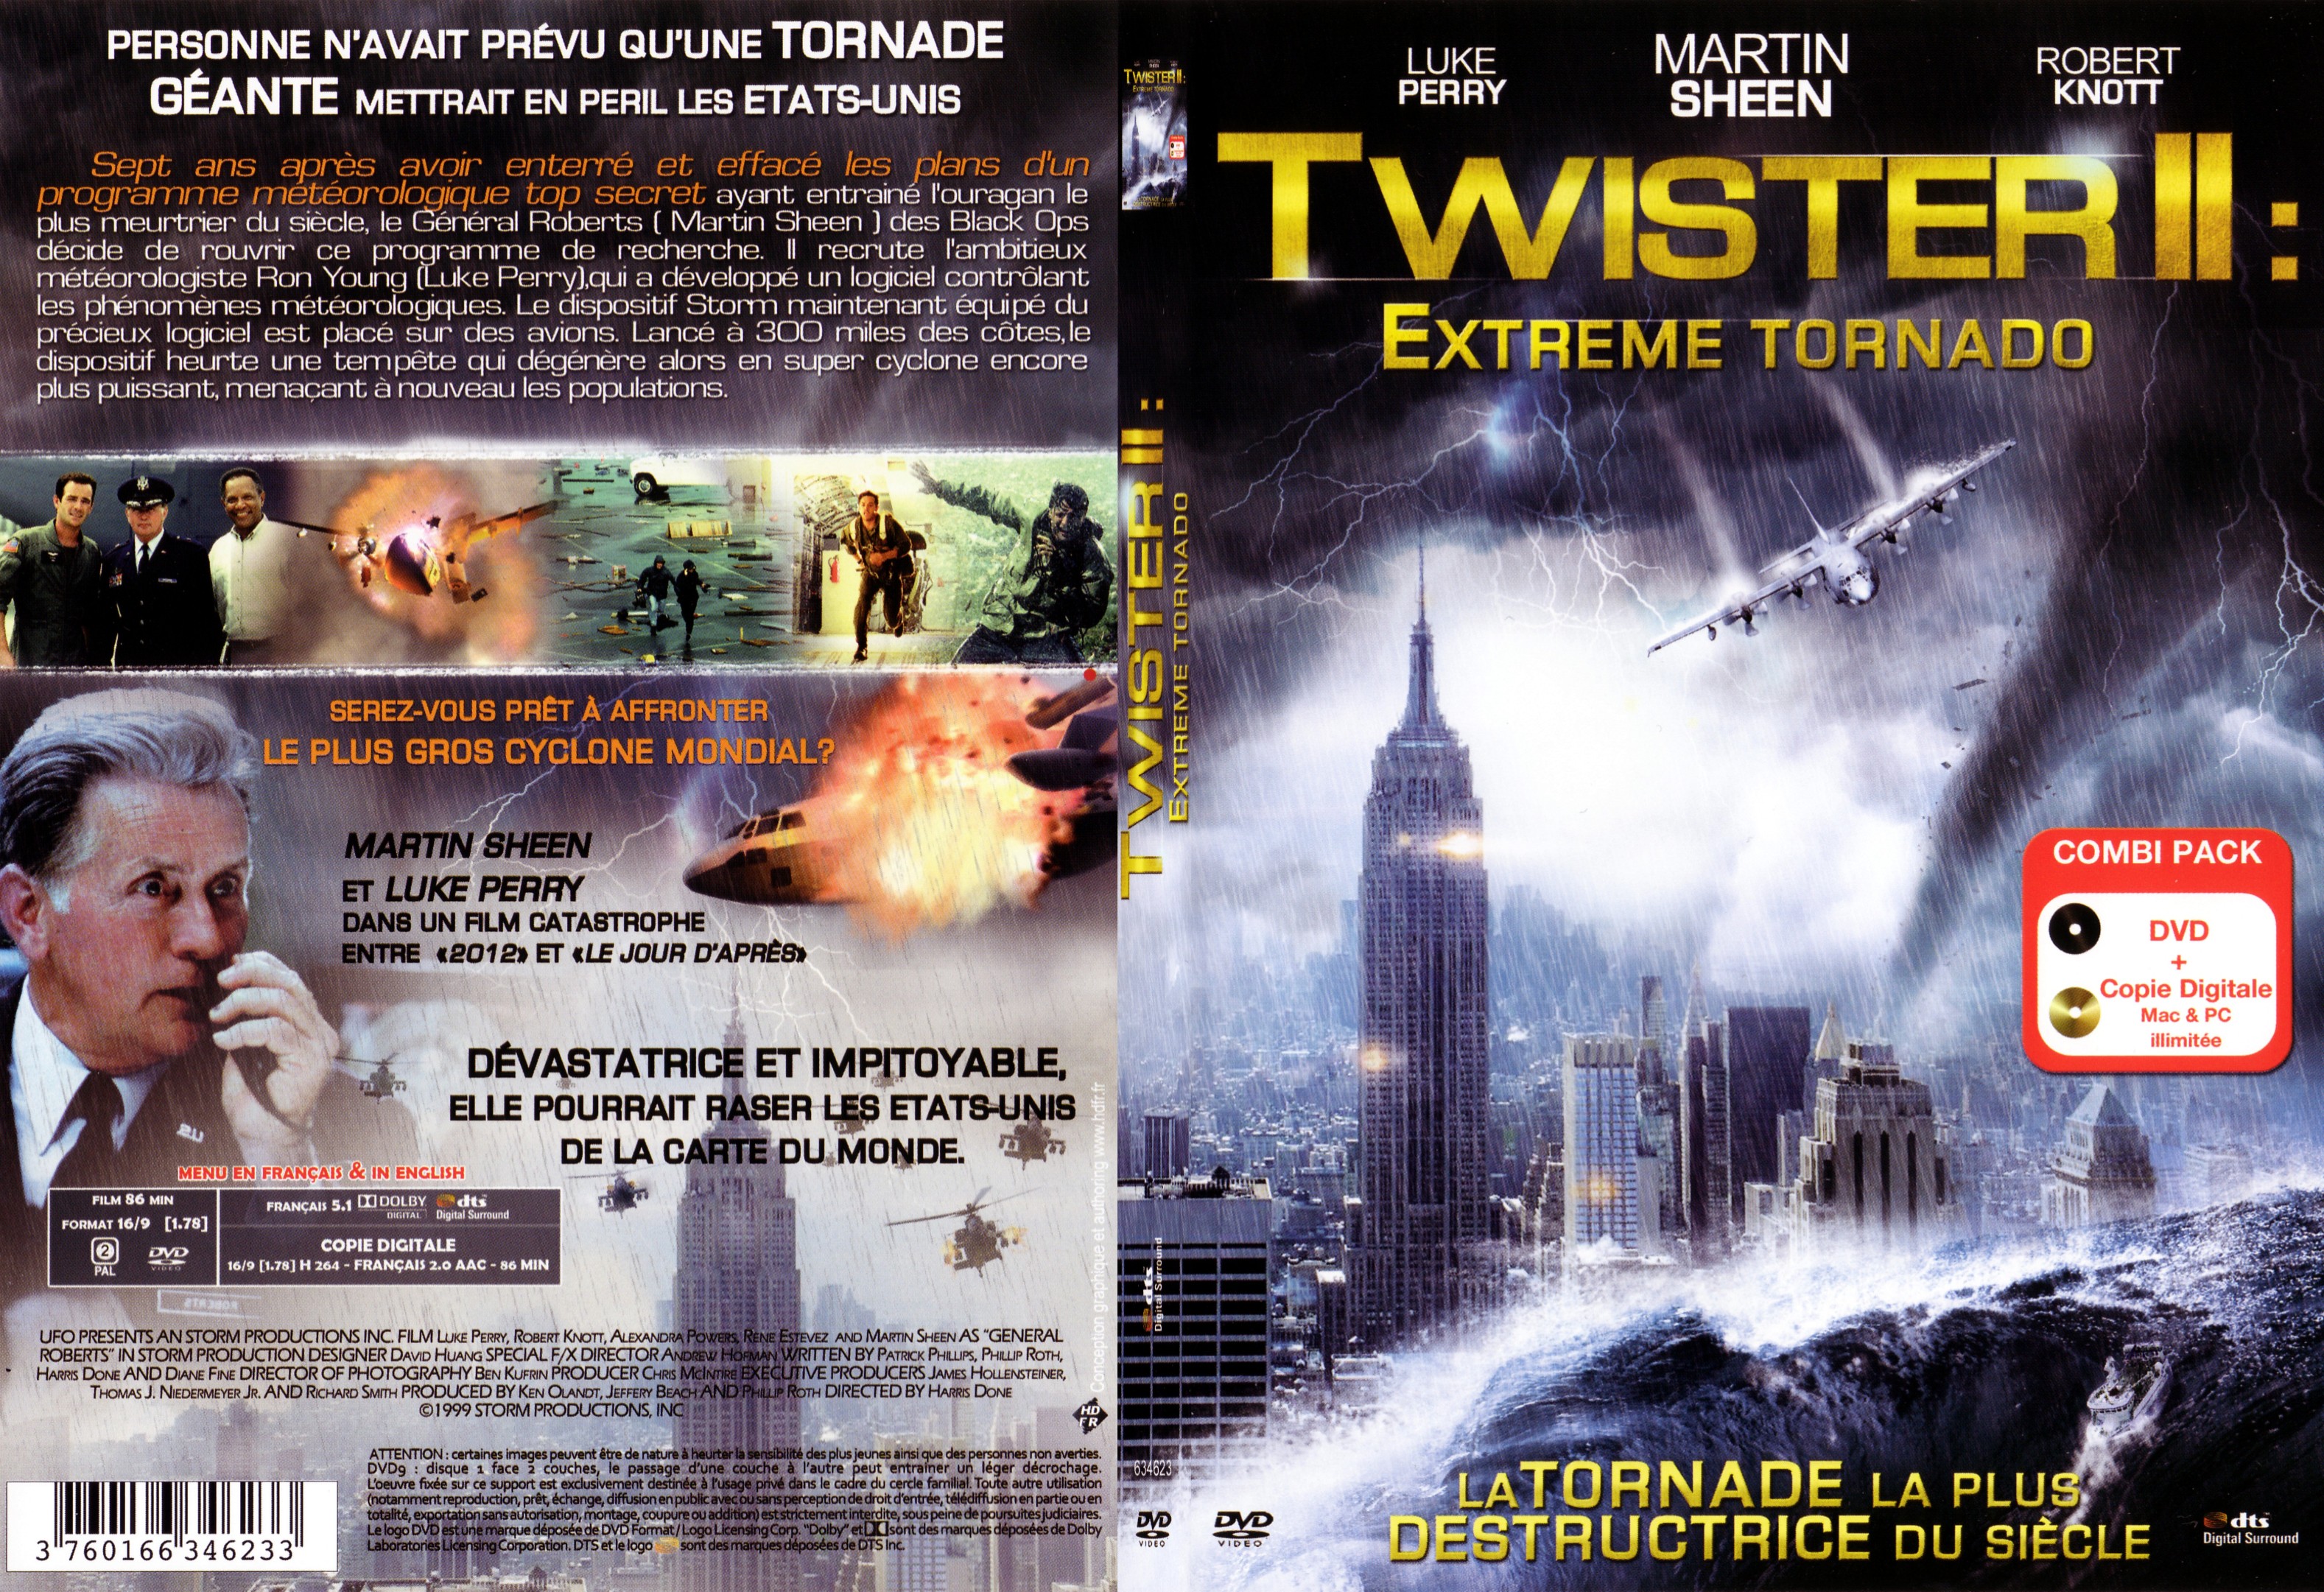 Jaquette DVD Twister 2 - Extreme tornado - SLIM